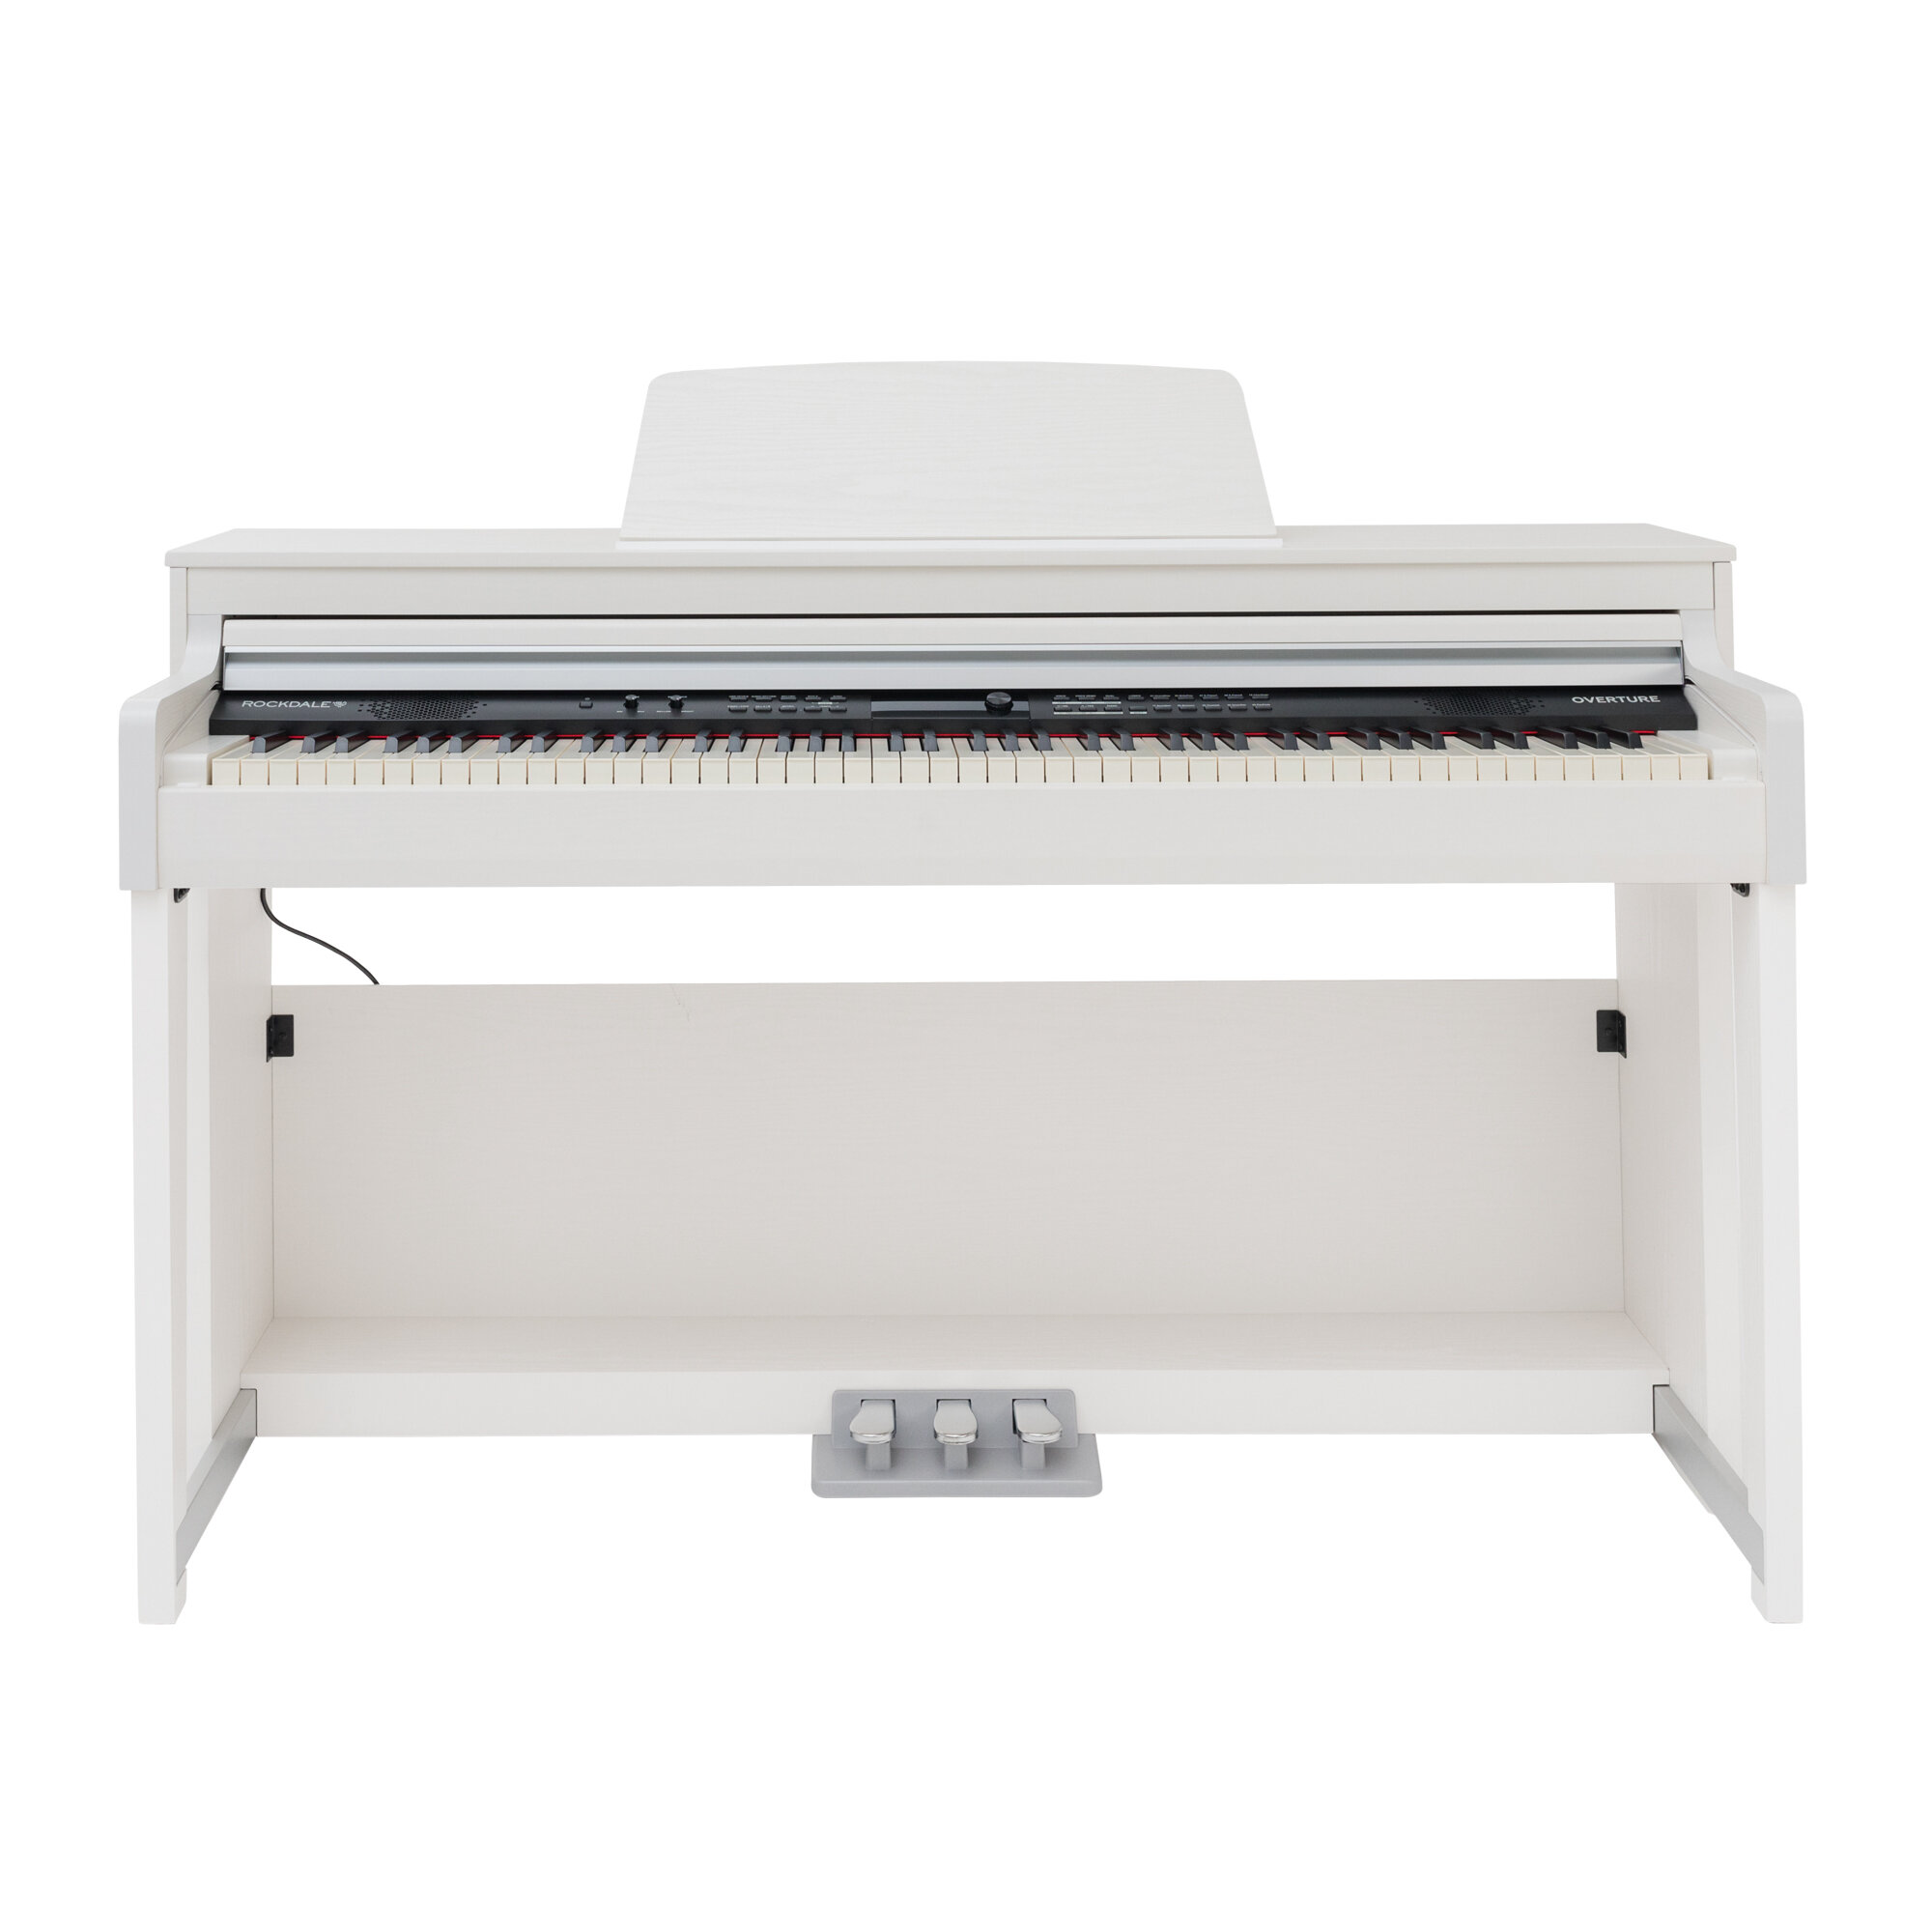 ROCKDALE Overture White цифровое пианино с автоаккомпанеметом 88 клавиш цвет белый